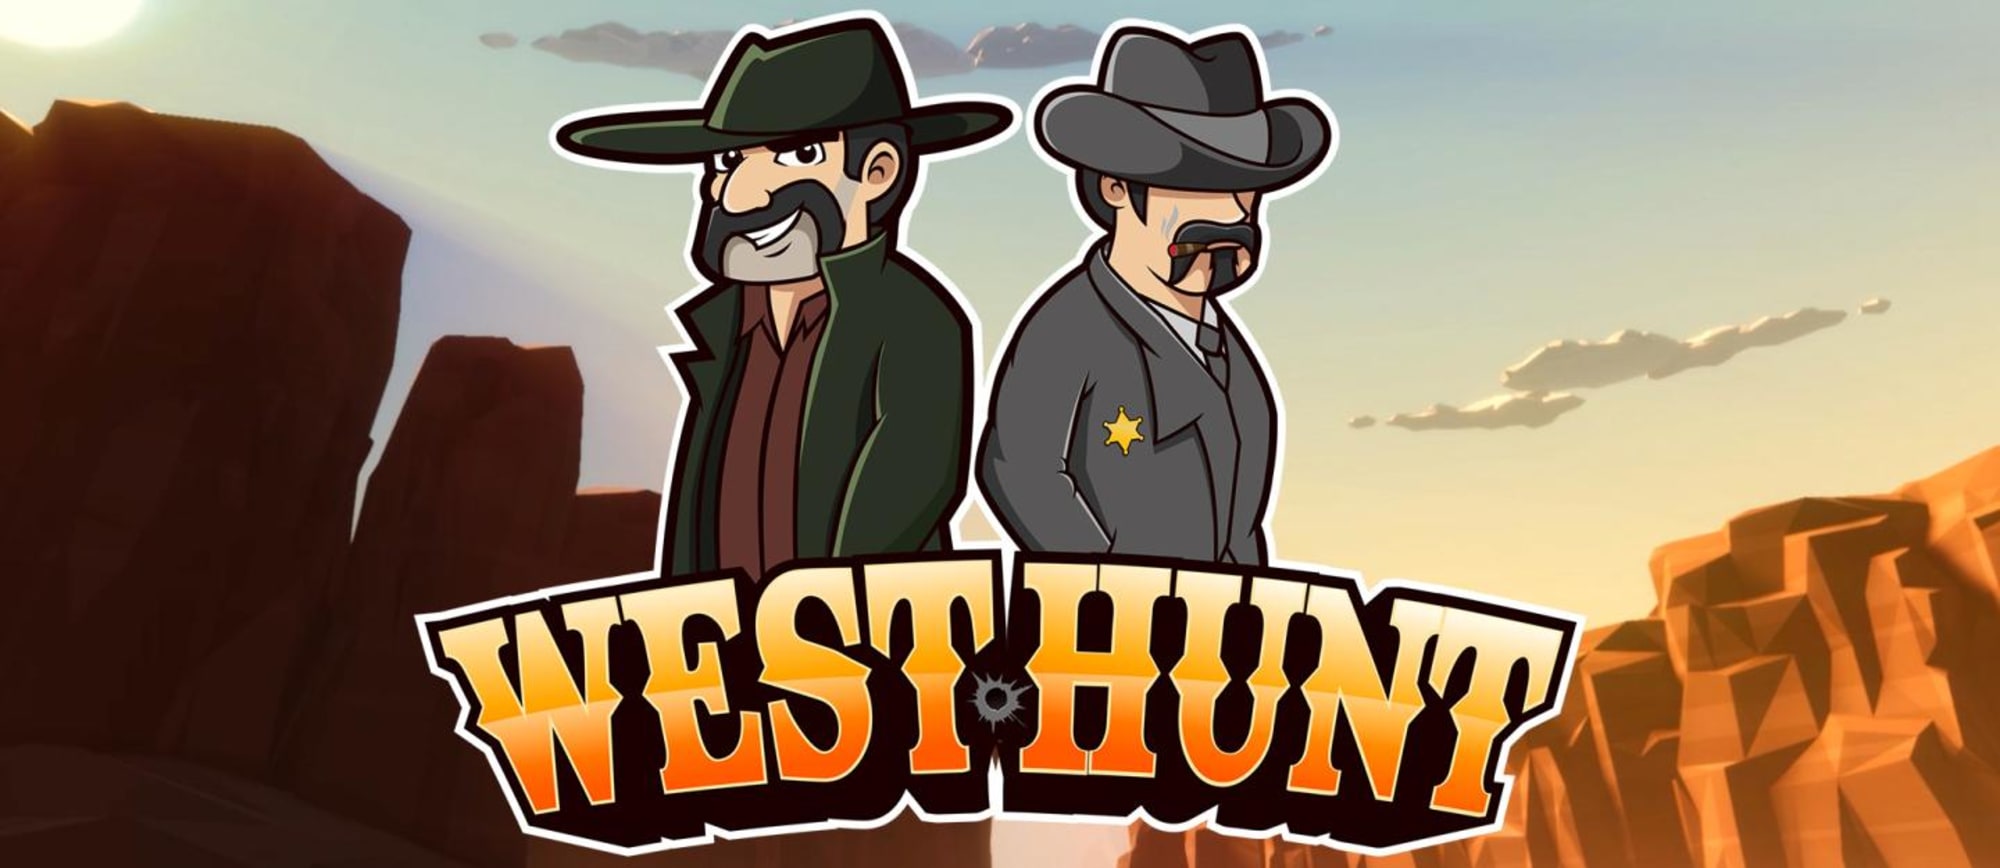 West Hunt social with cowboy twist